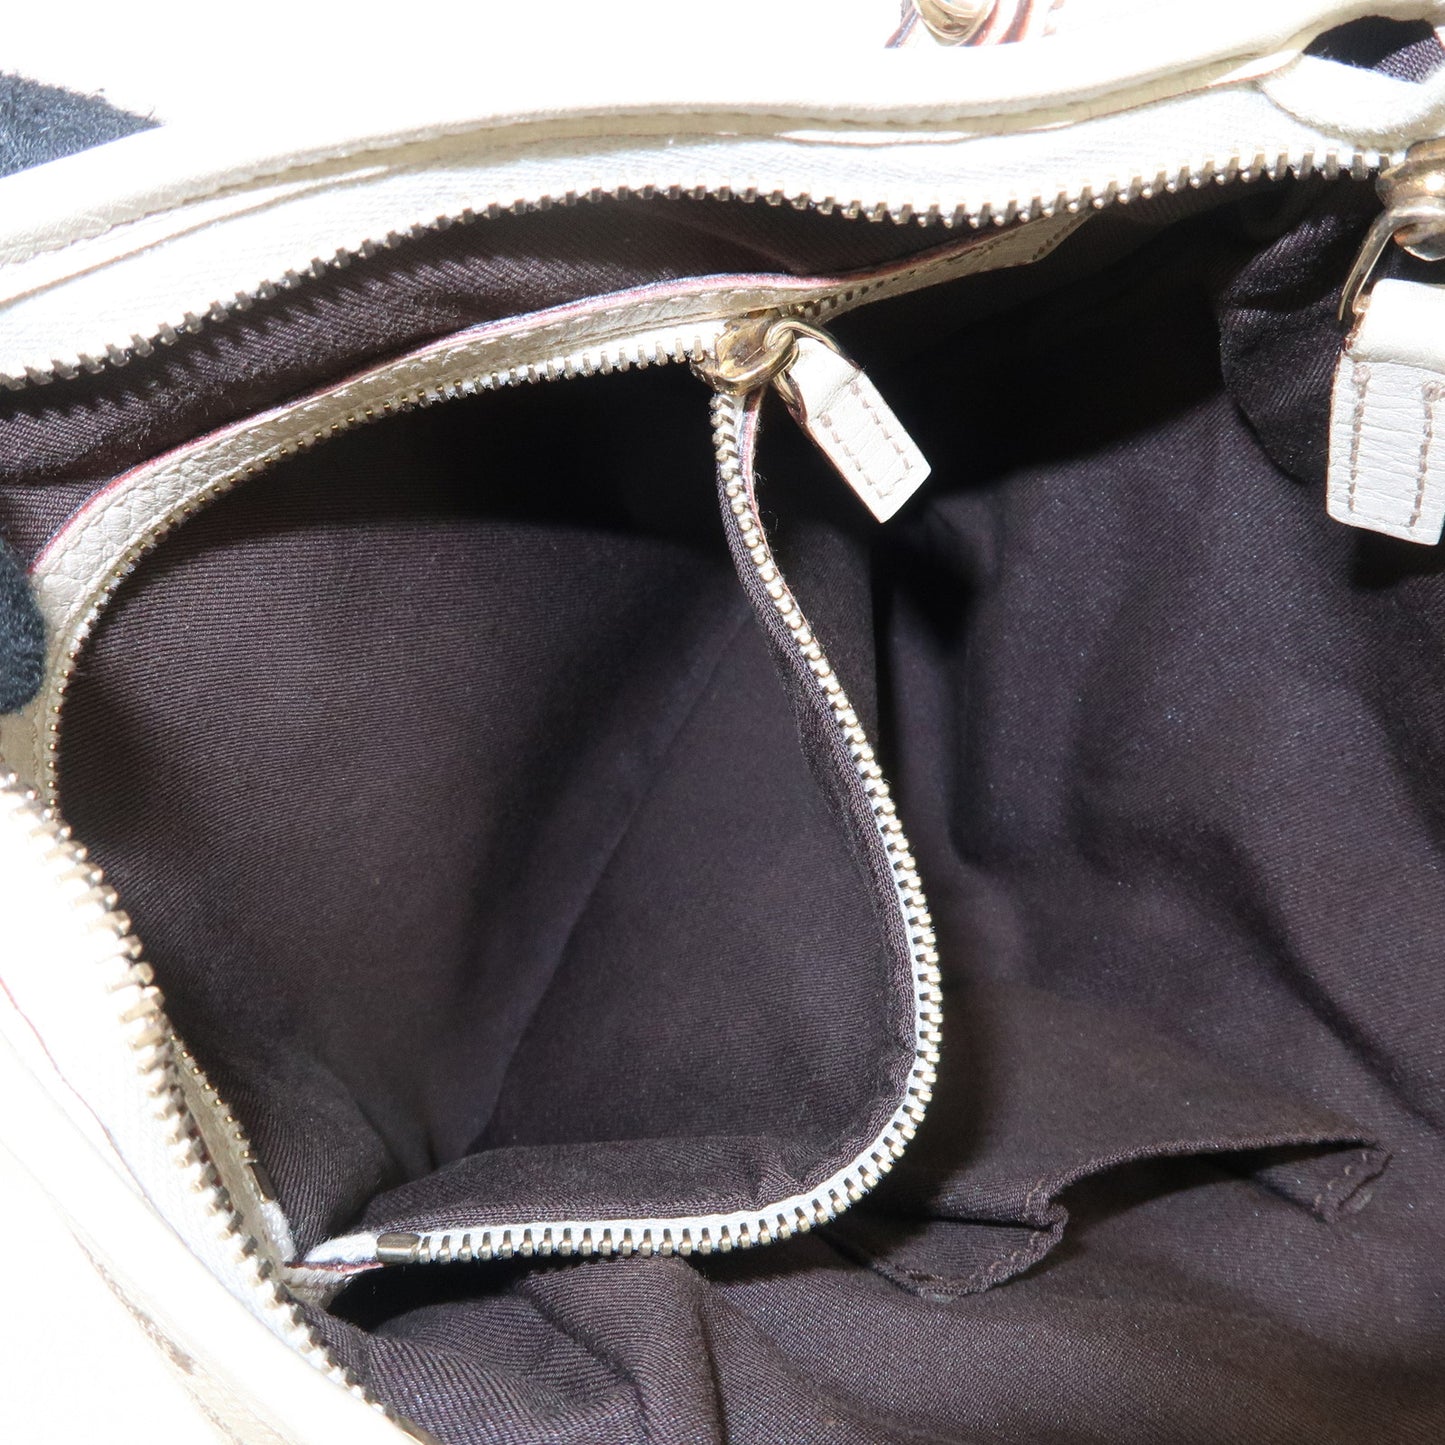 GUCCI Sherry GG Canvas Leather Shoulder Bag Beige Ivory 144388